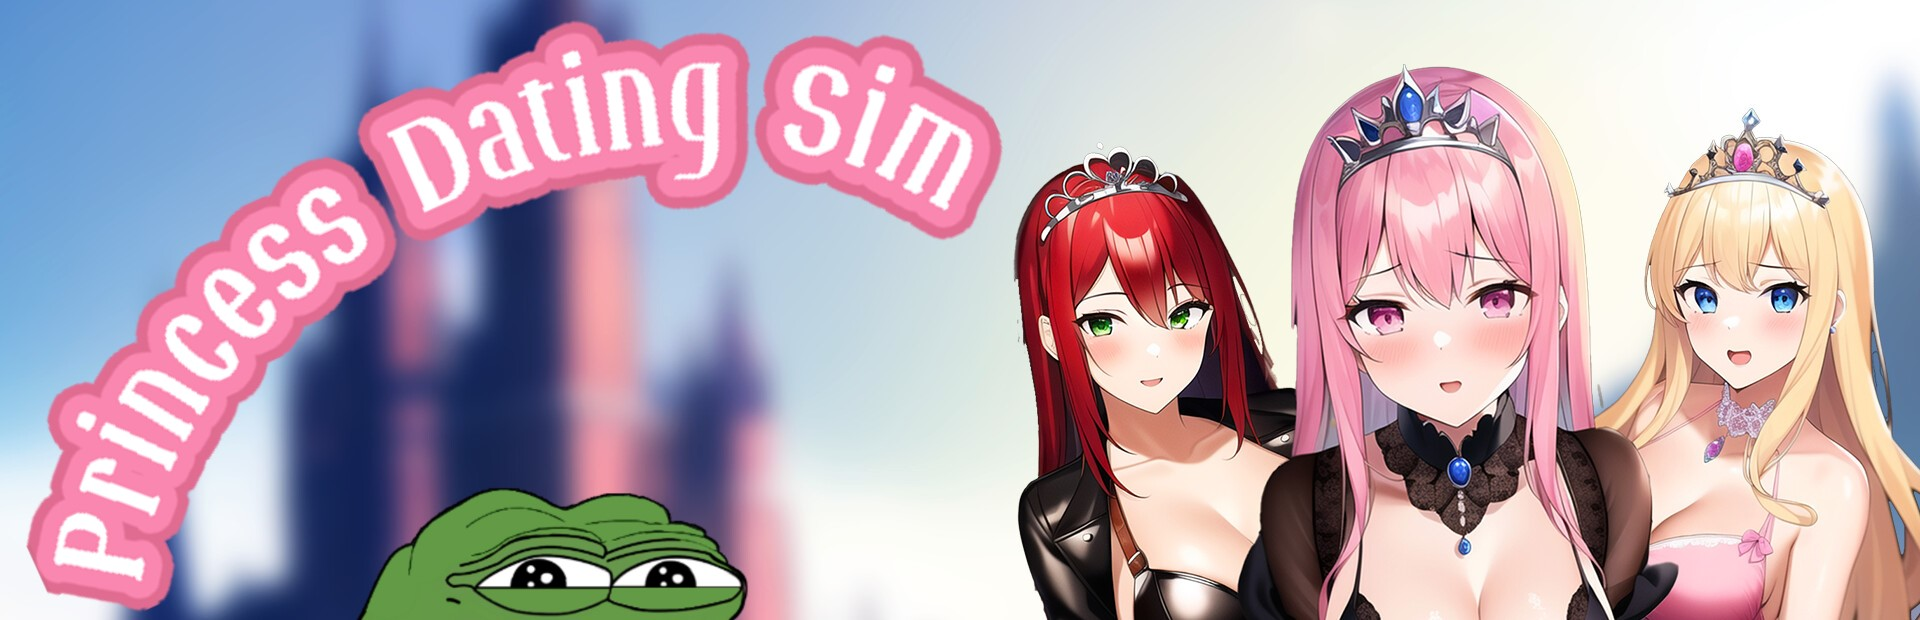 Princess Dating Sim poster